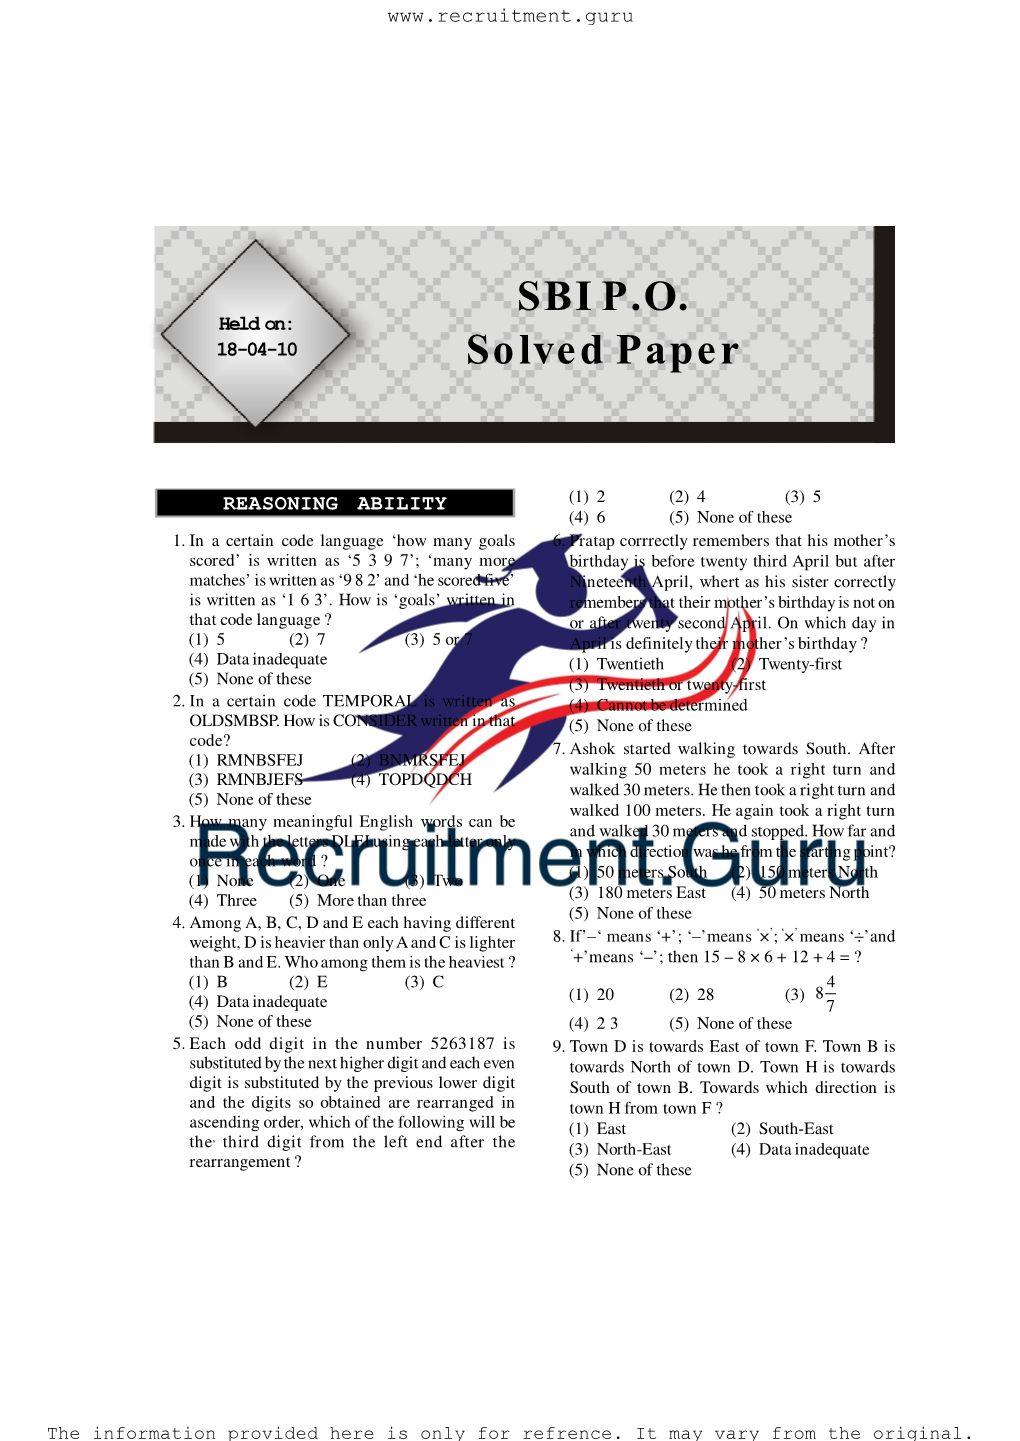 SBI P.O. Solved Paper